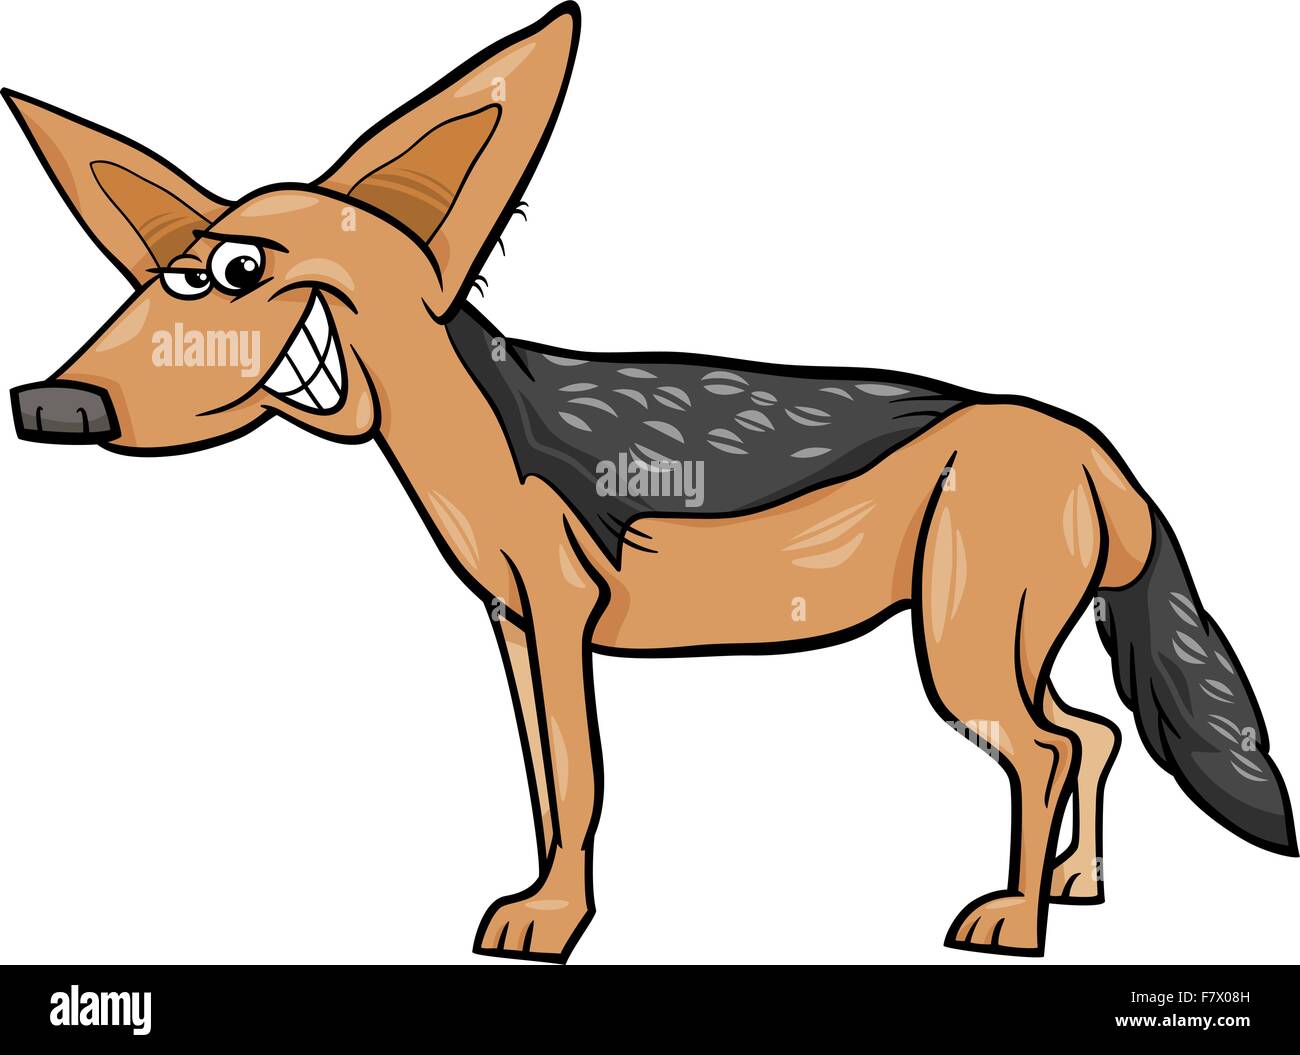 jackal animal cartoon illustration Stock Vector